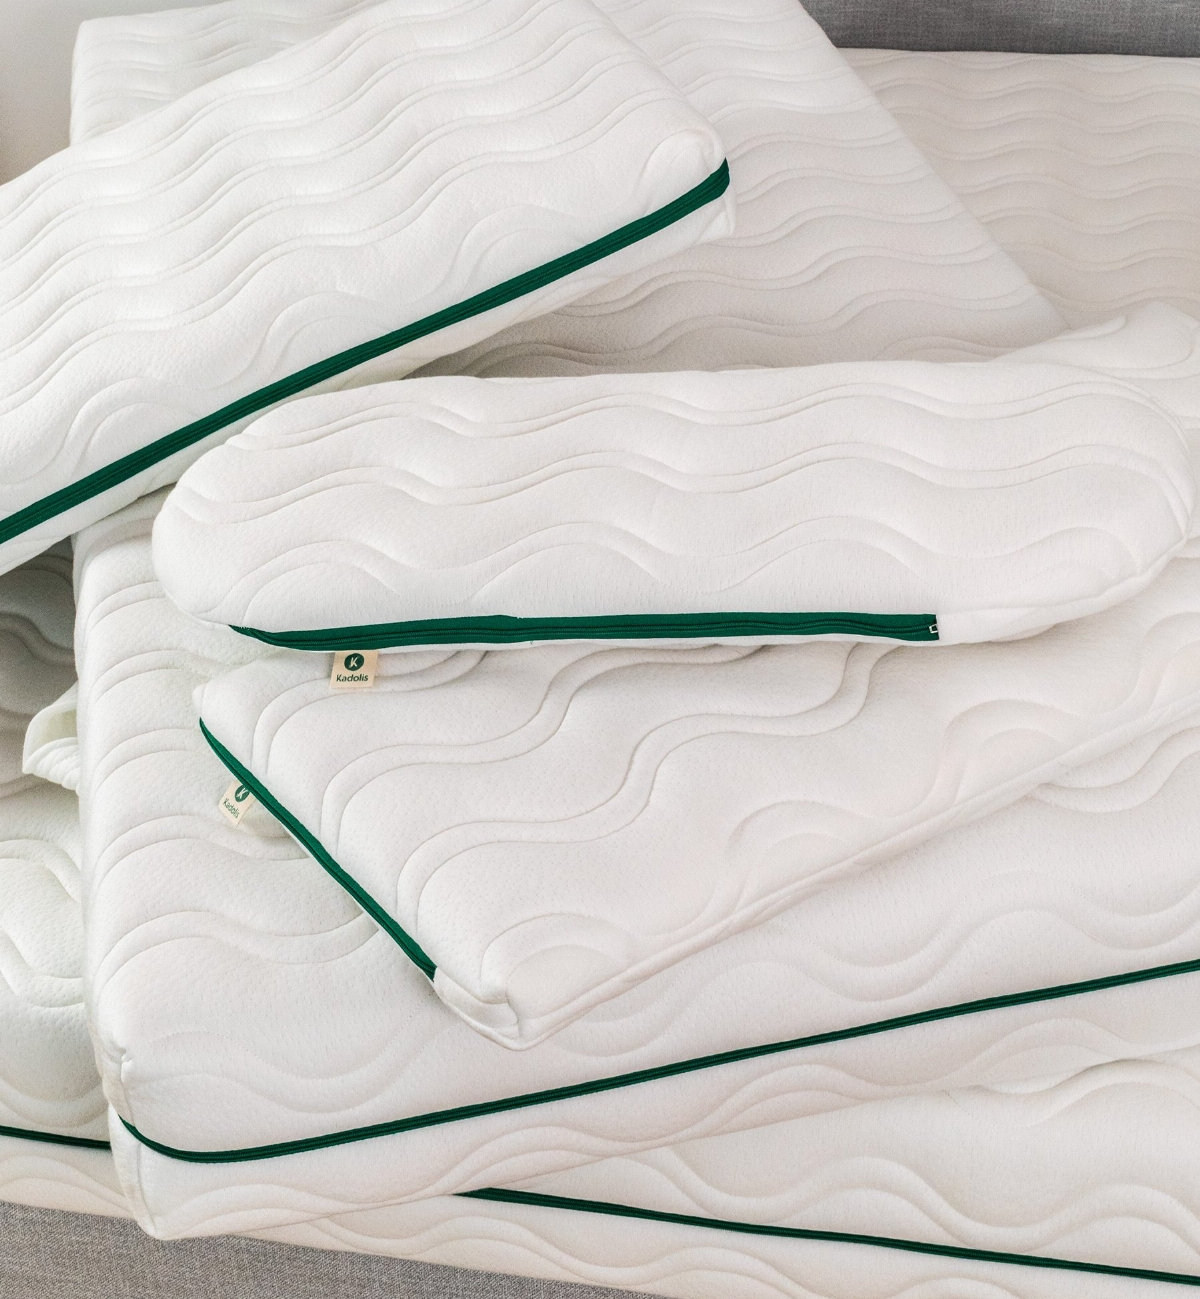 Aloenatura® natural mattress for children